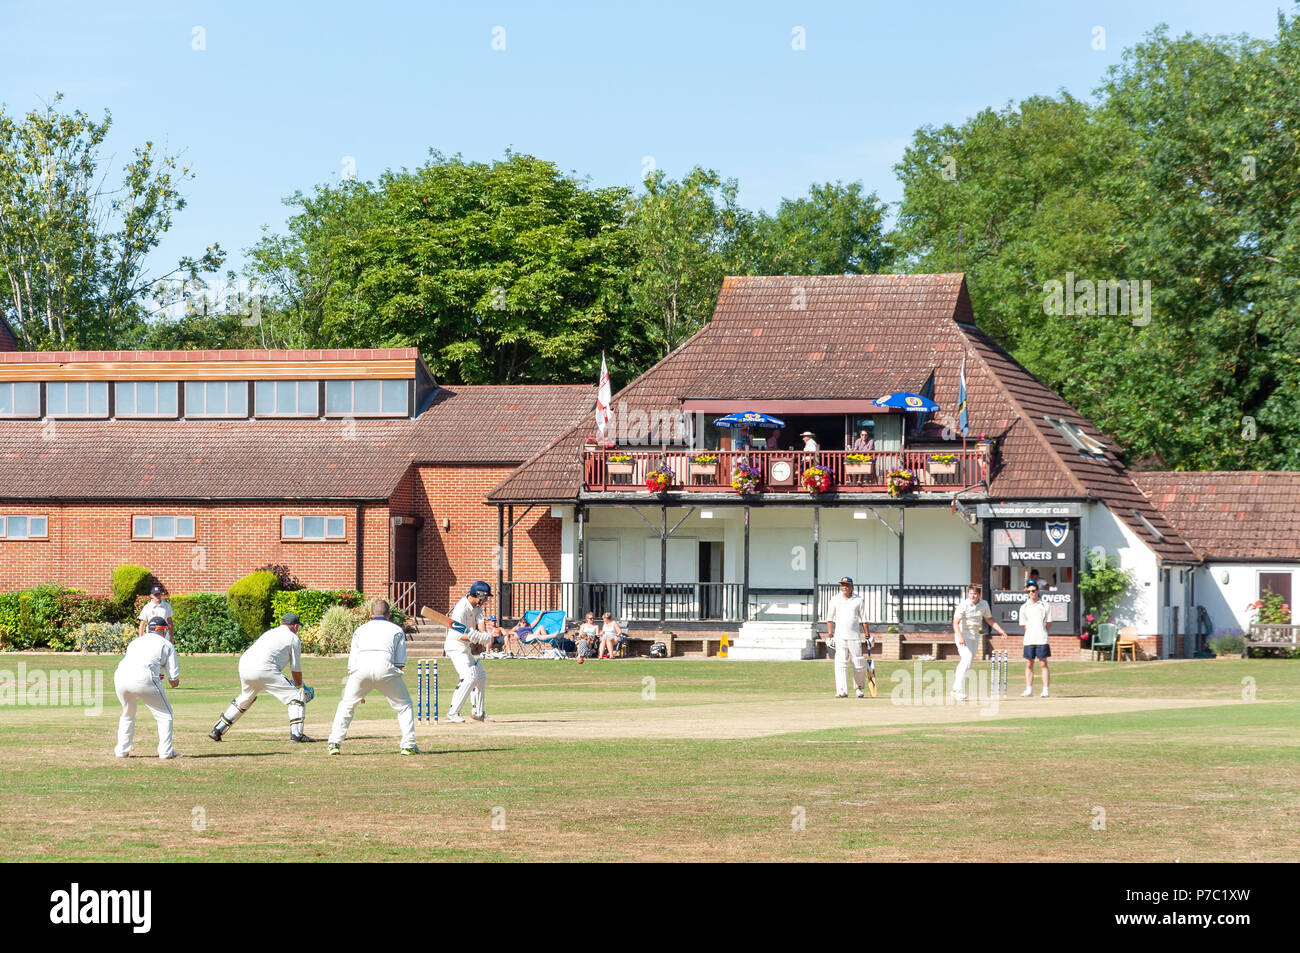 Cricket match at Waysbury Cricket Club, The Green, Wraysbury, Berkshire, England, United Kingdom Stock Photo